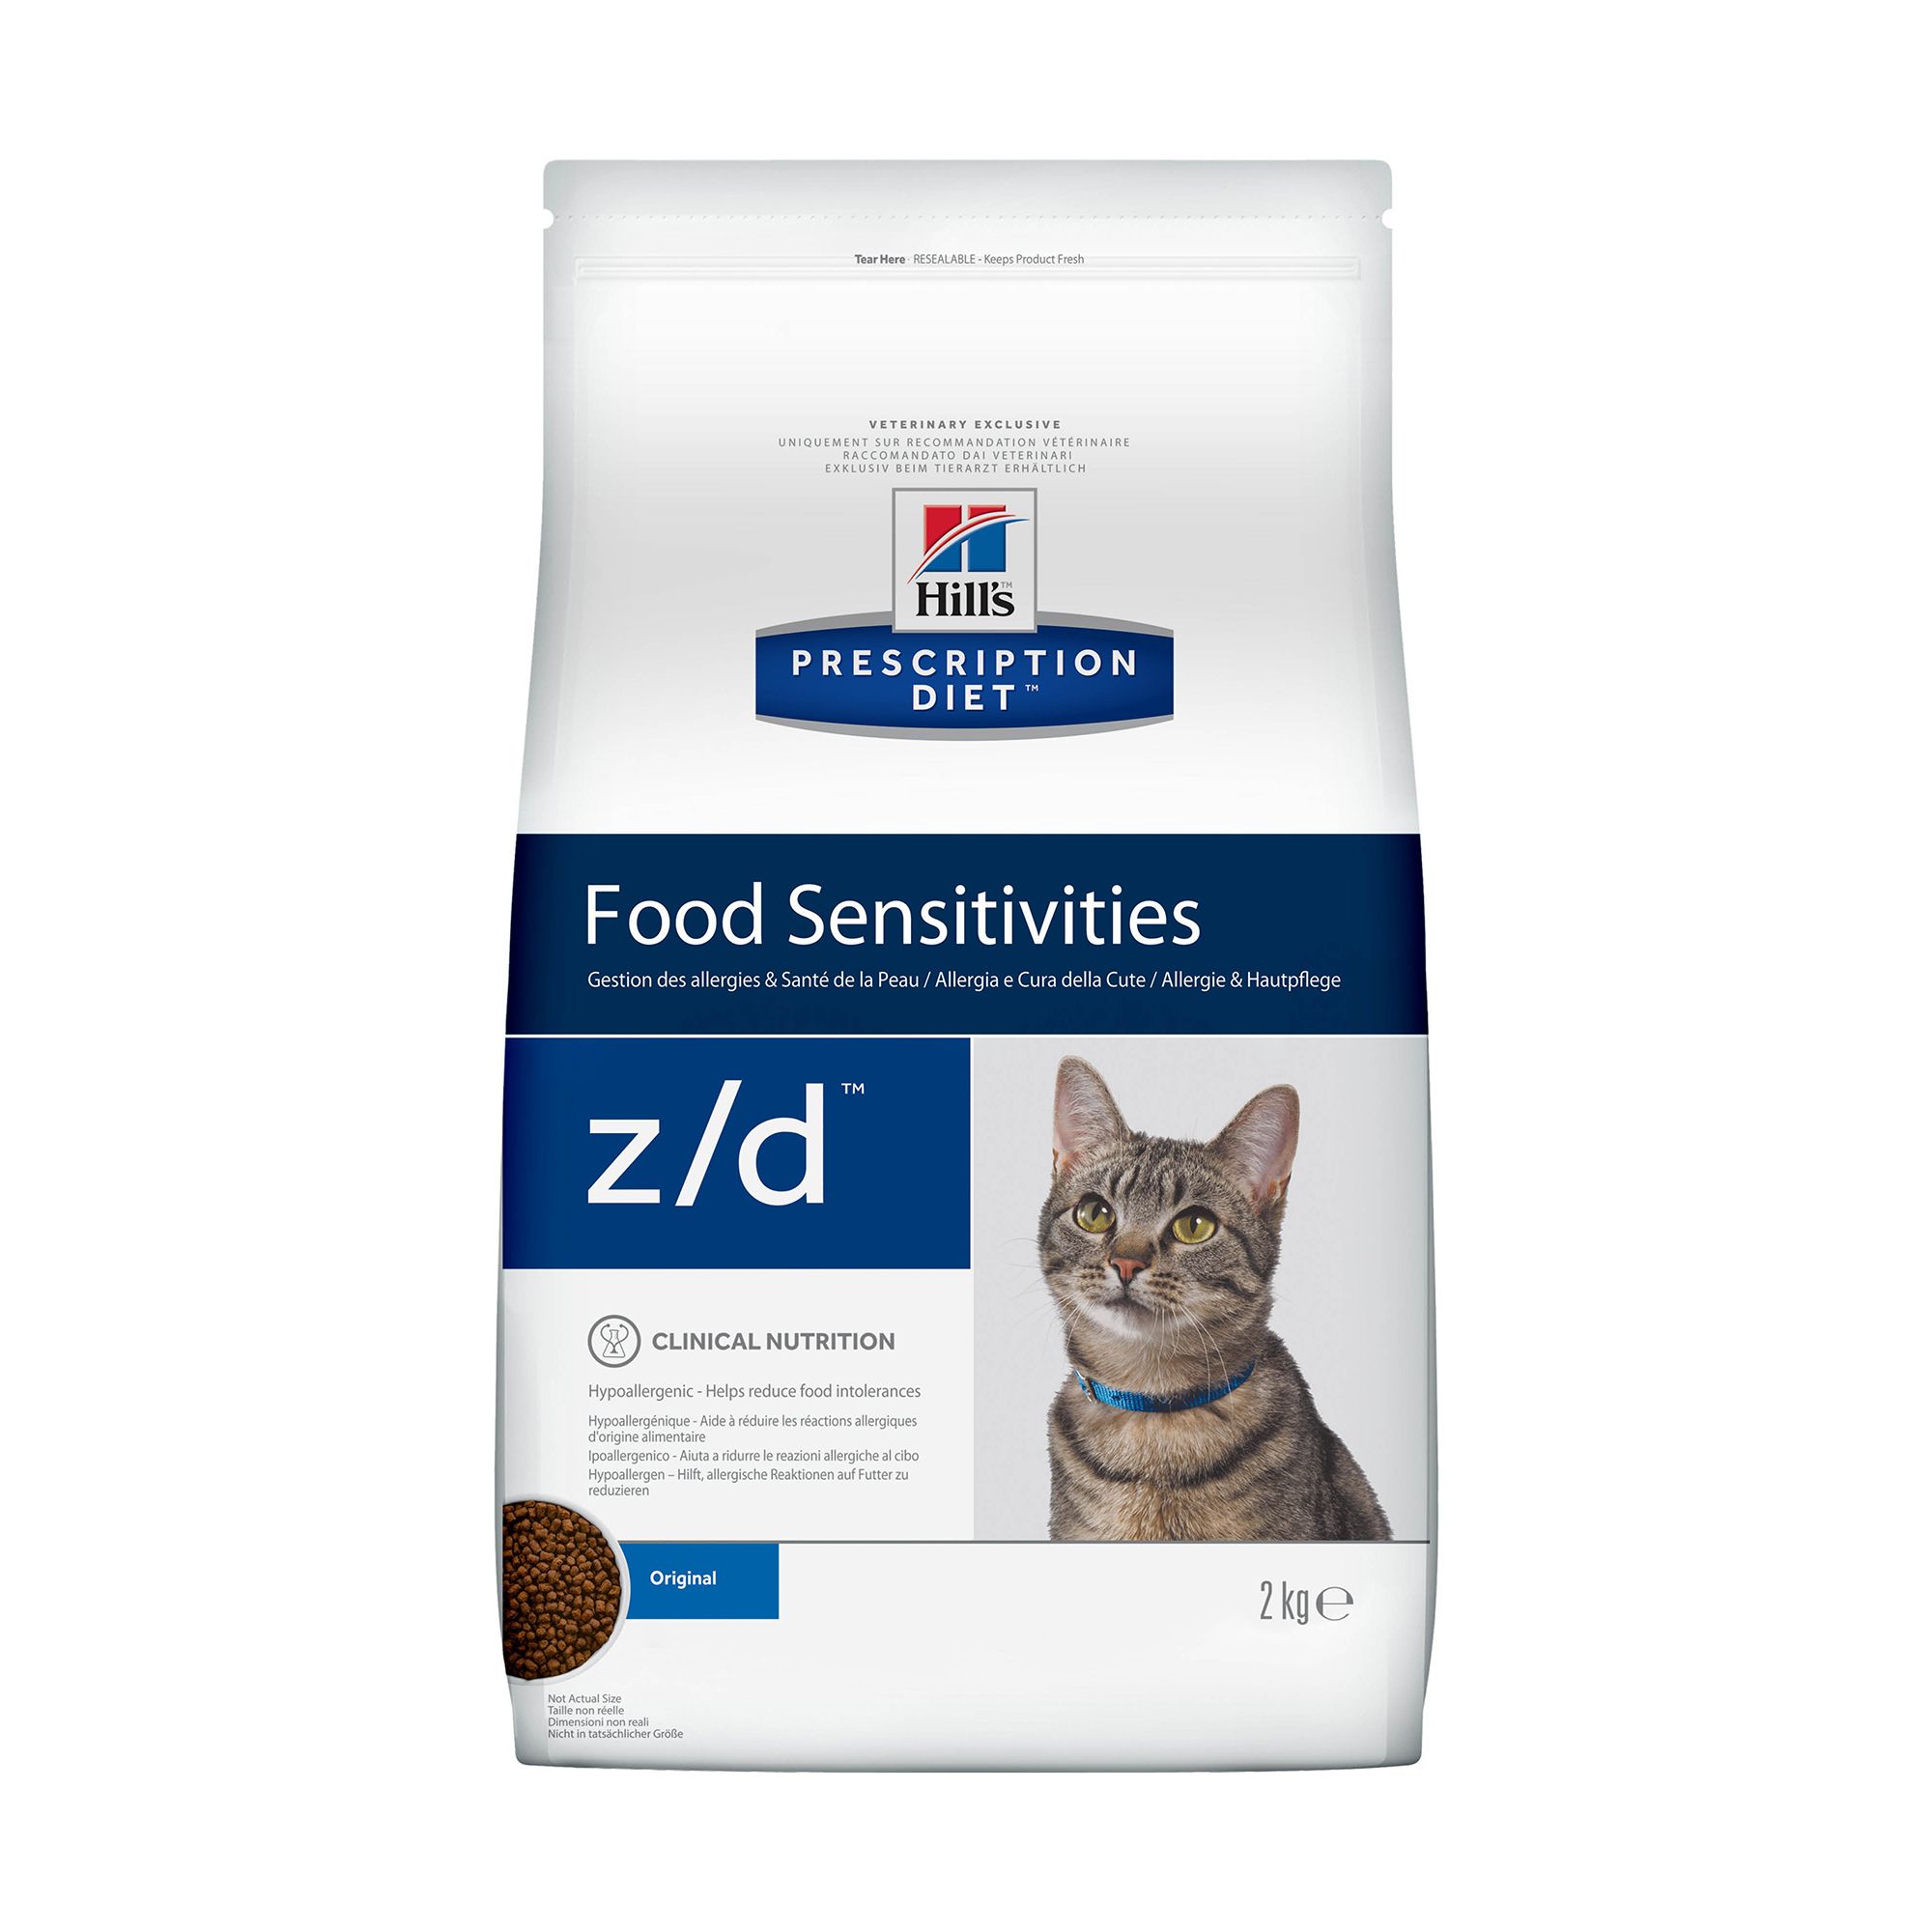 Hill's PD Food Sensitivities Z/D для кошек 2 кг 1